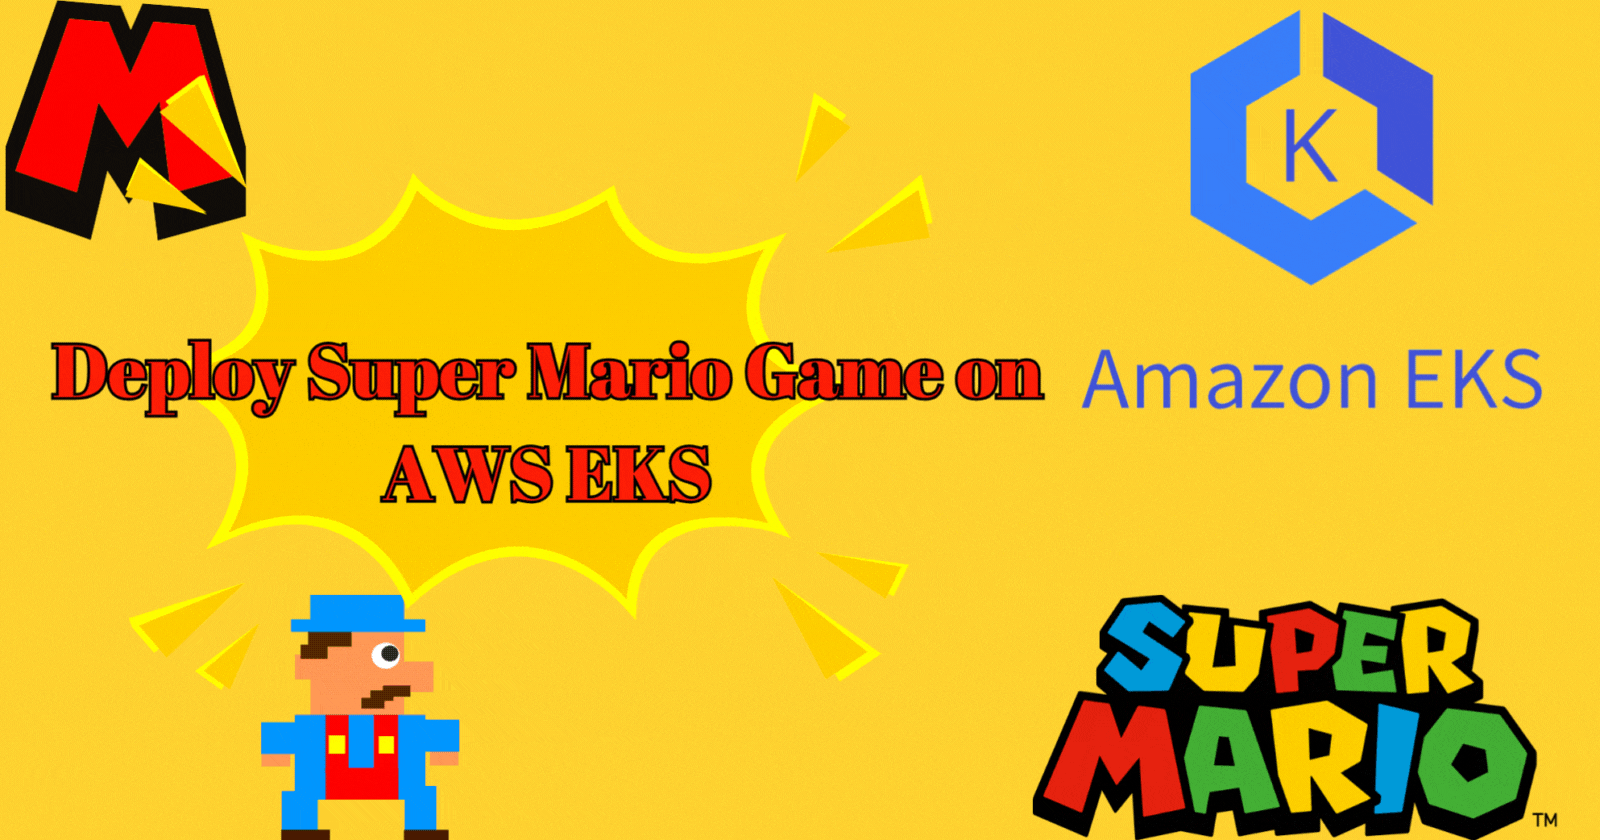 Kubernetes Adventures: Super Mario Edition